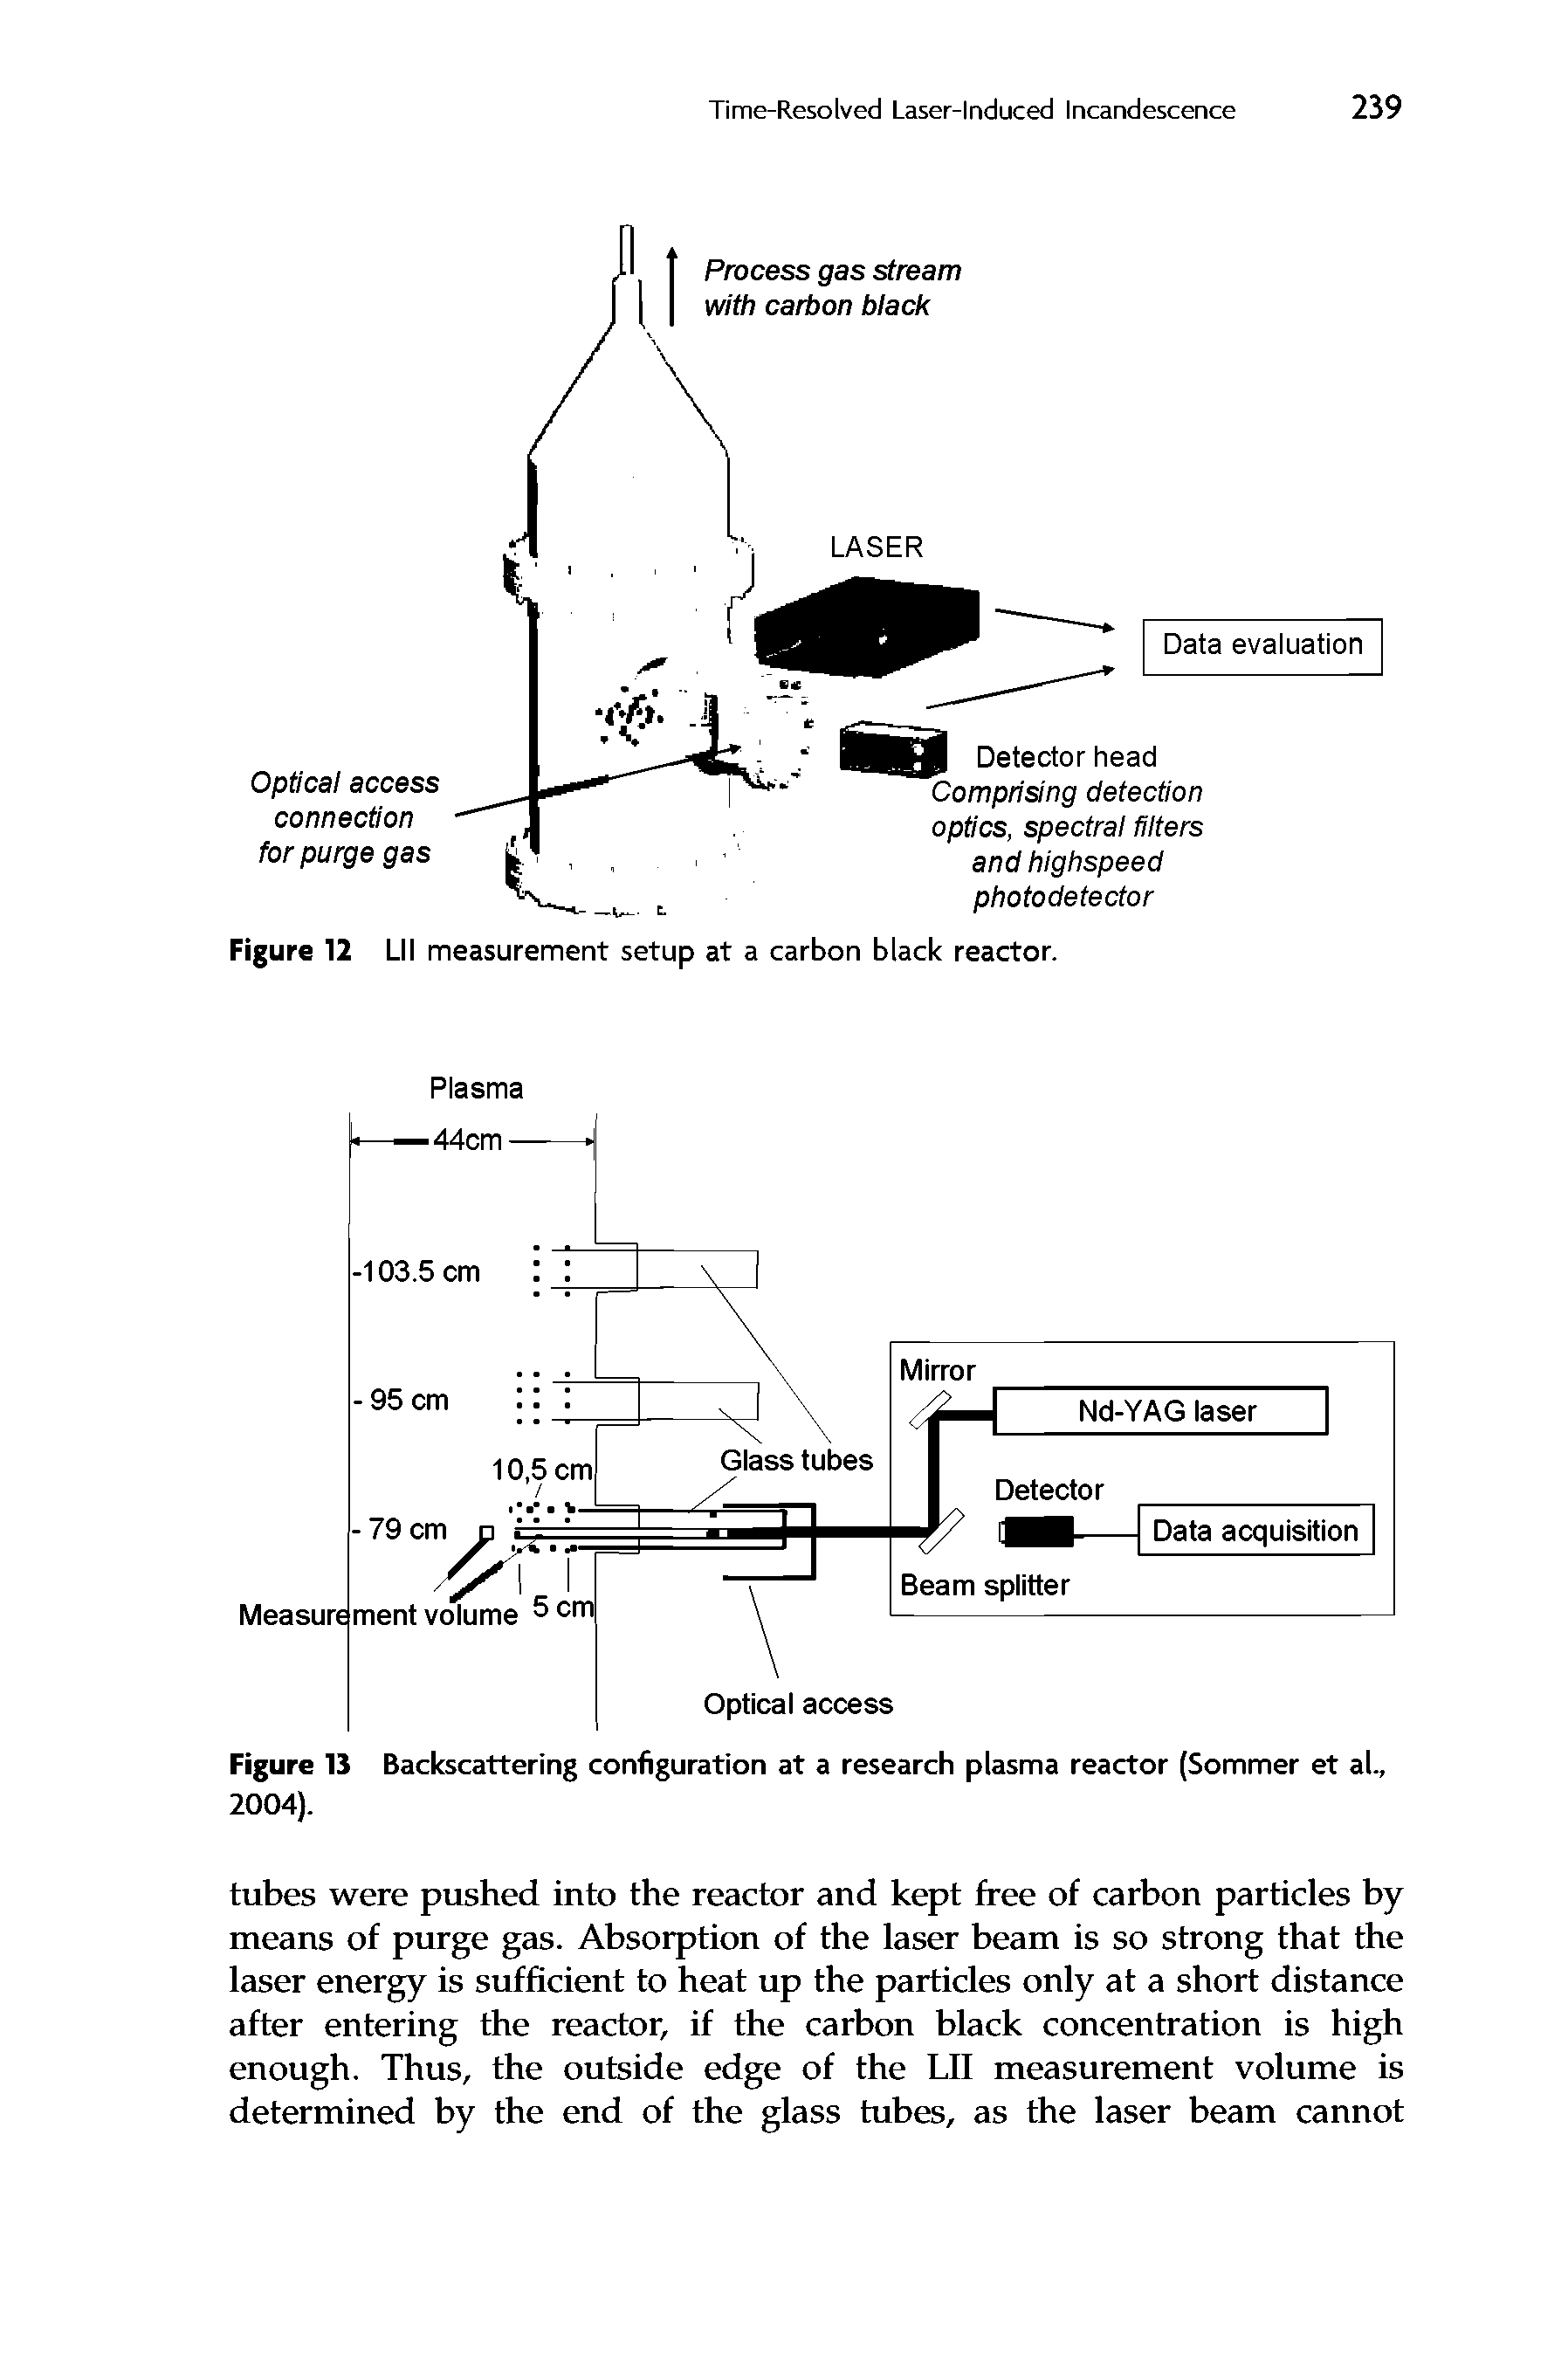 Figure 13 Backscattering configuration at a research plasma reactor (Sommer et al, 2004).